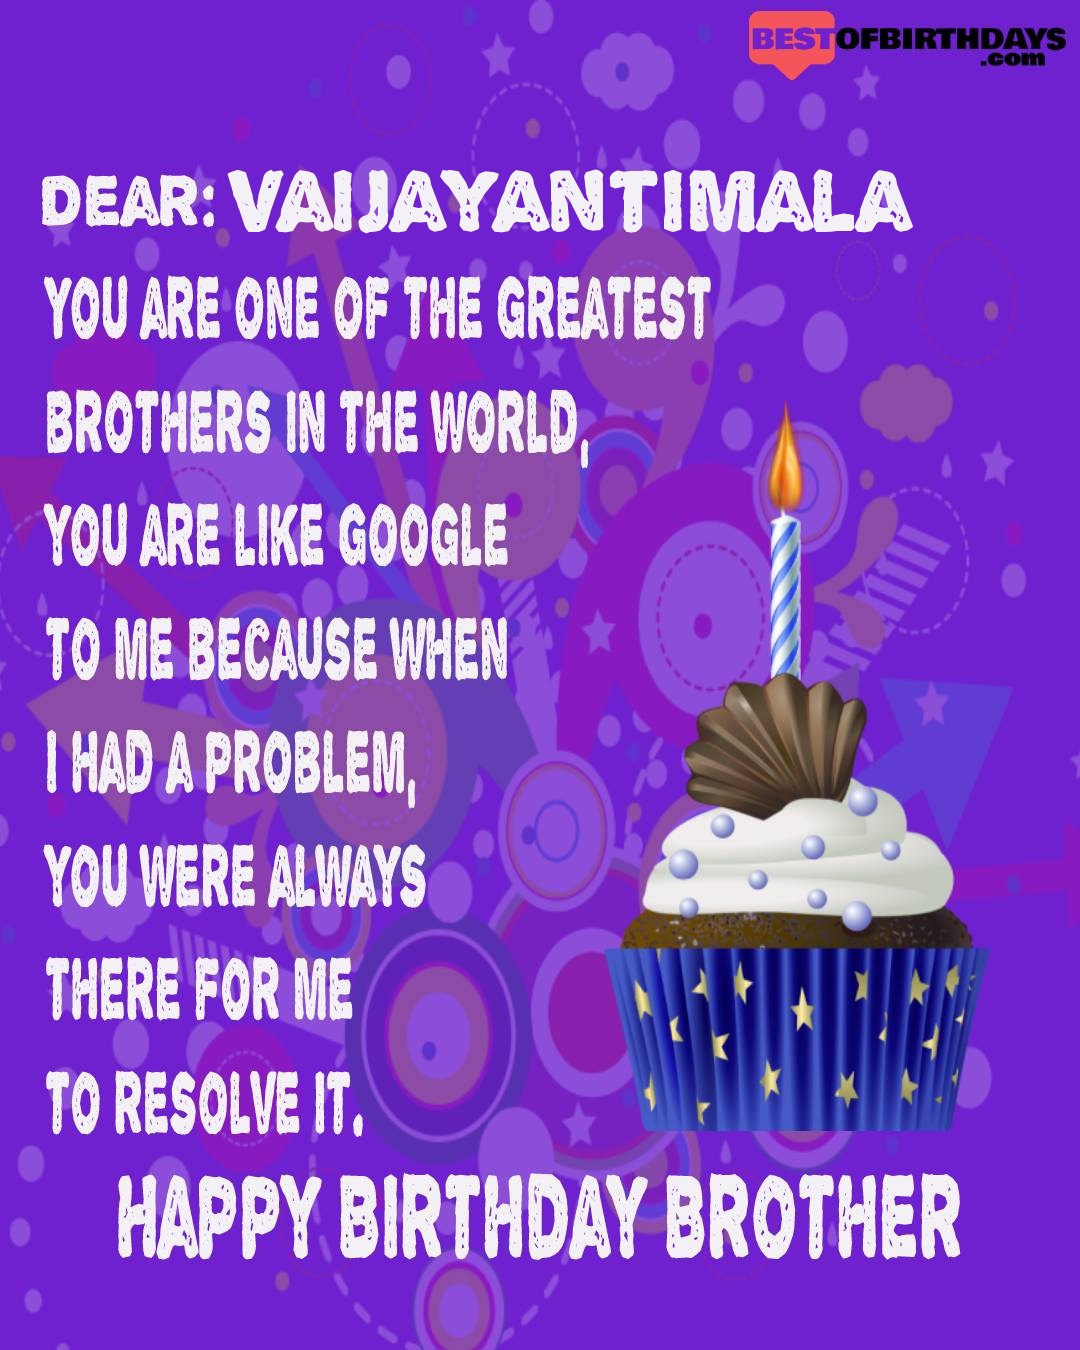 Happy birthday vaijayantimala bhai brother bro